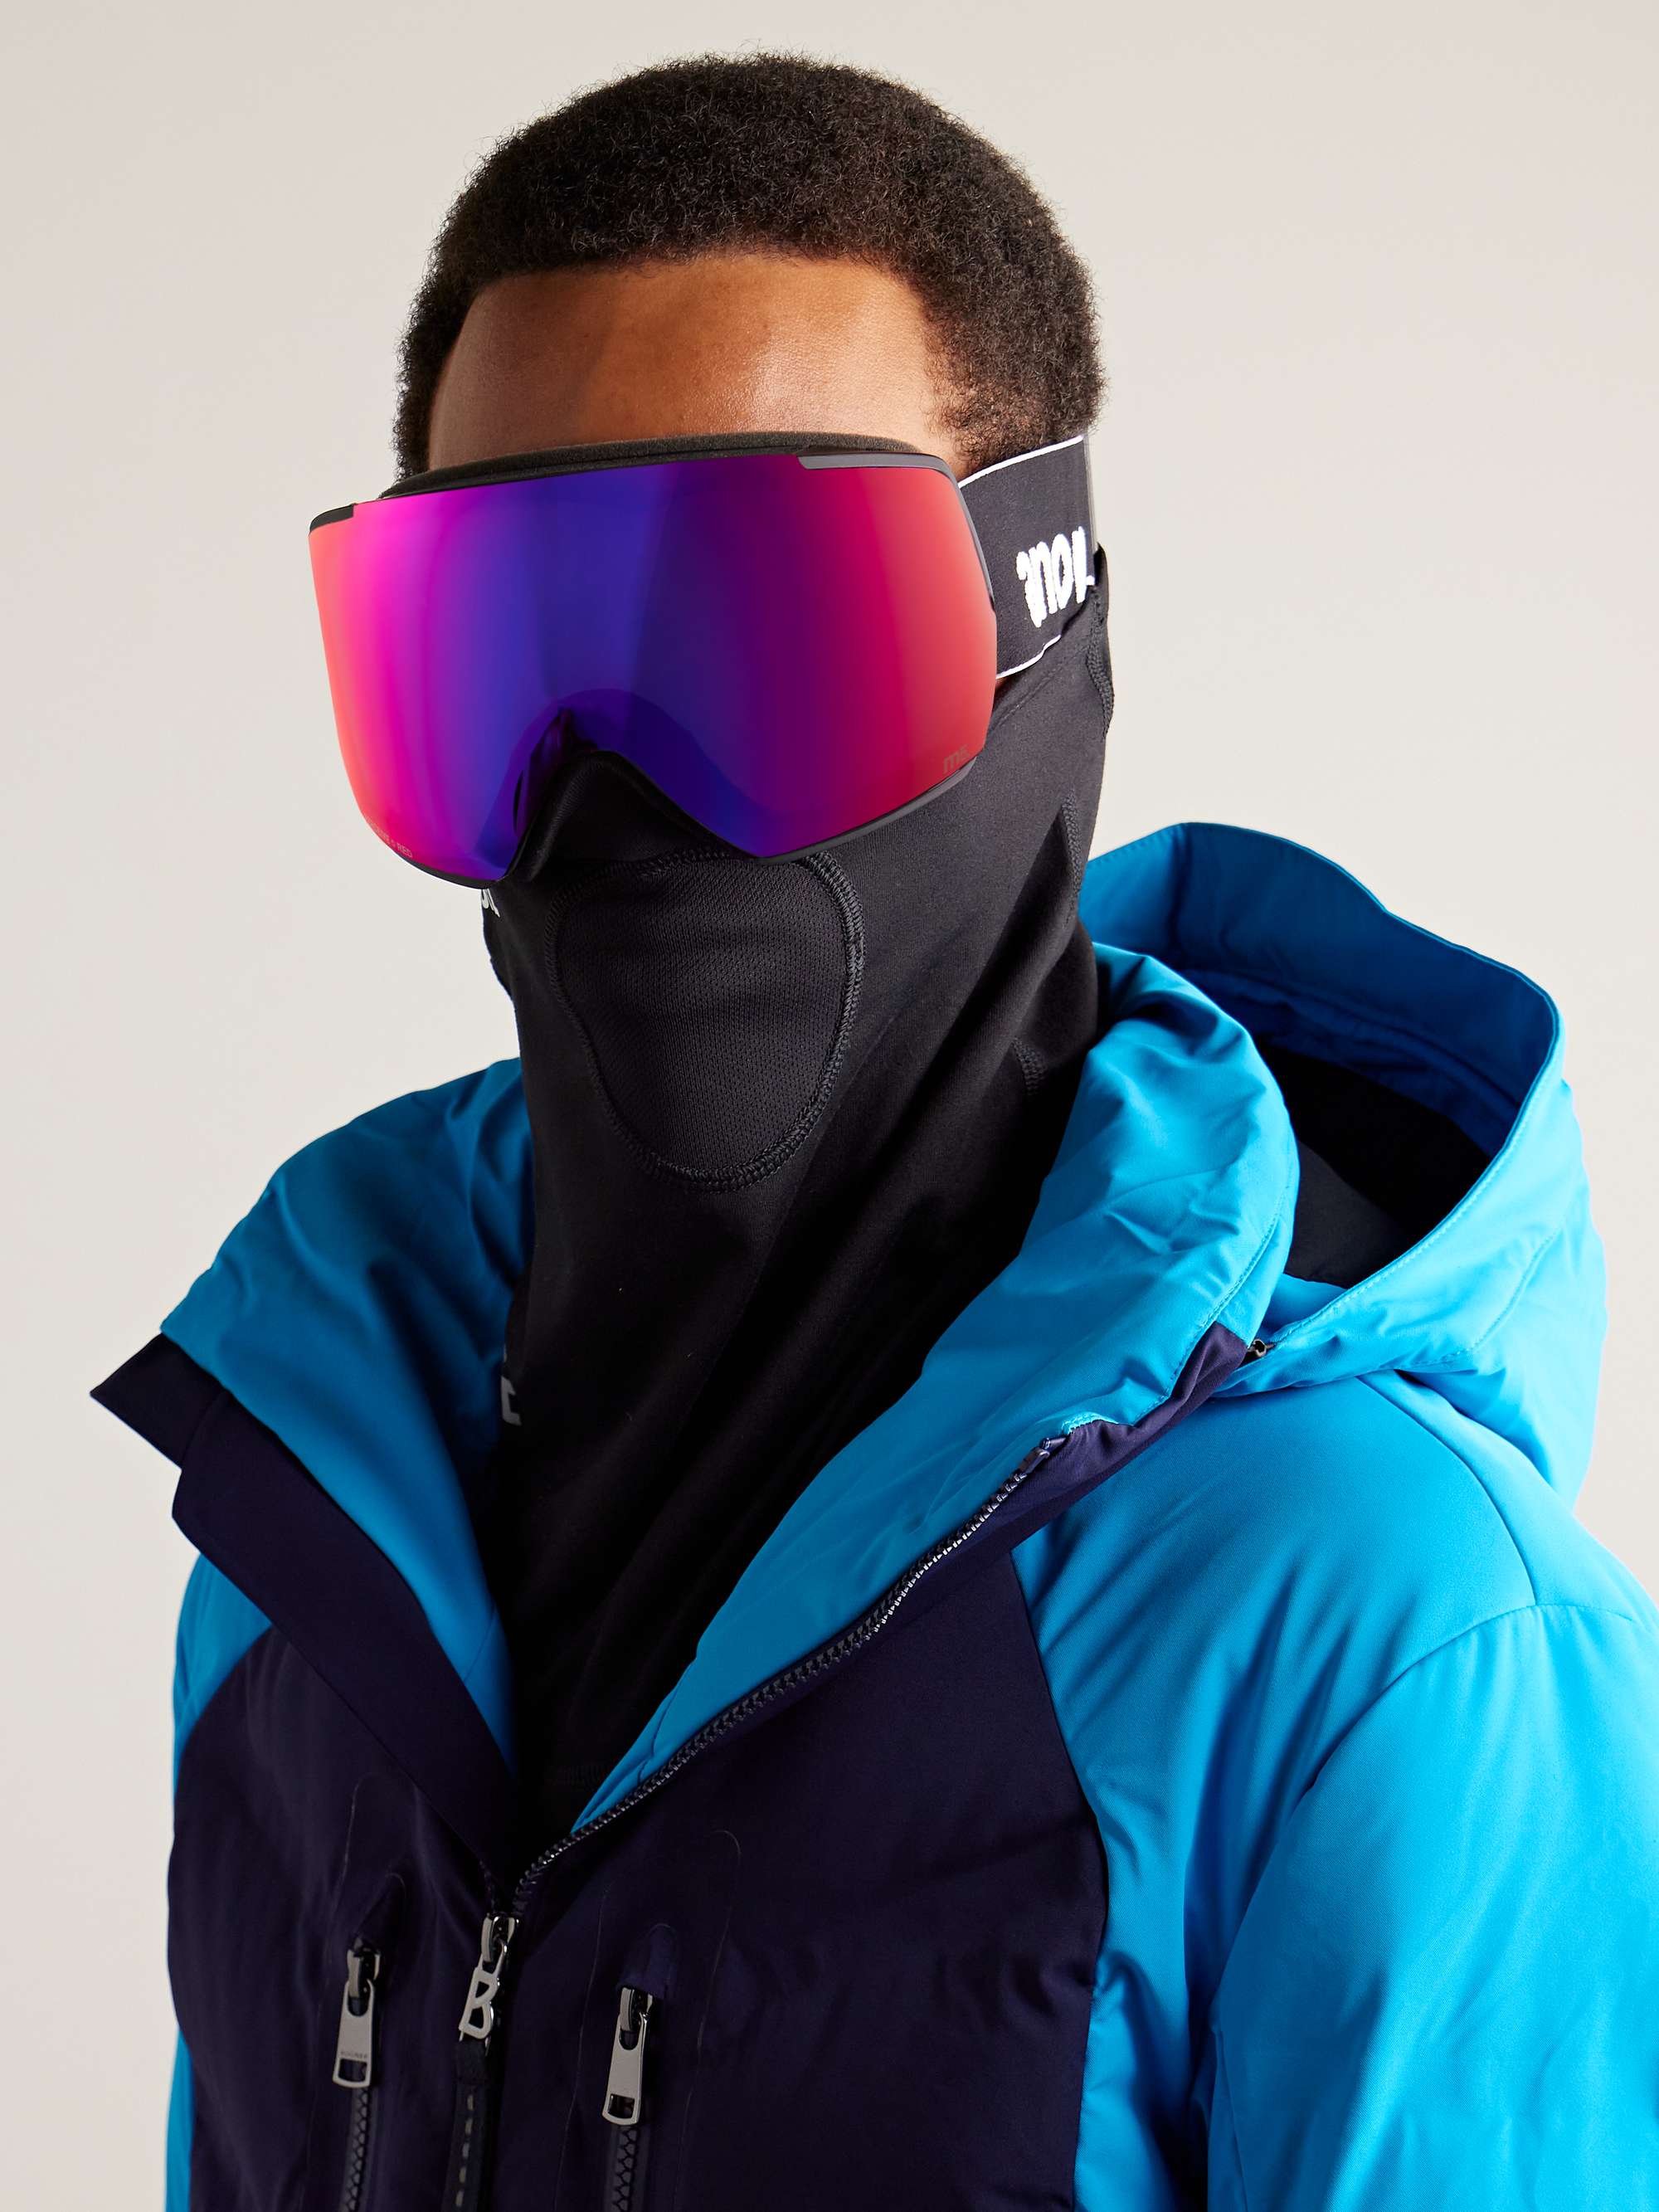 ANON M5 Ski Goggles for Men | MR PORTER